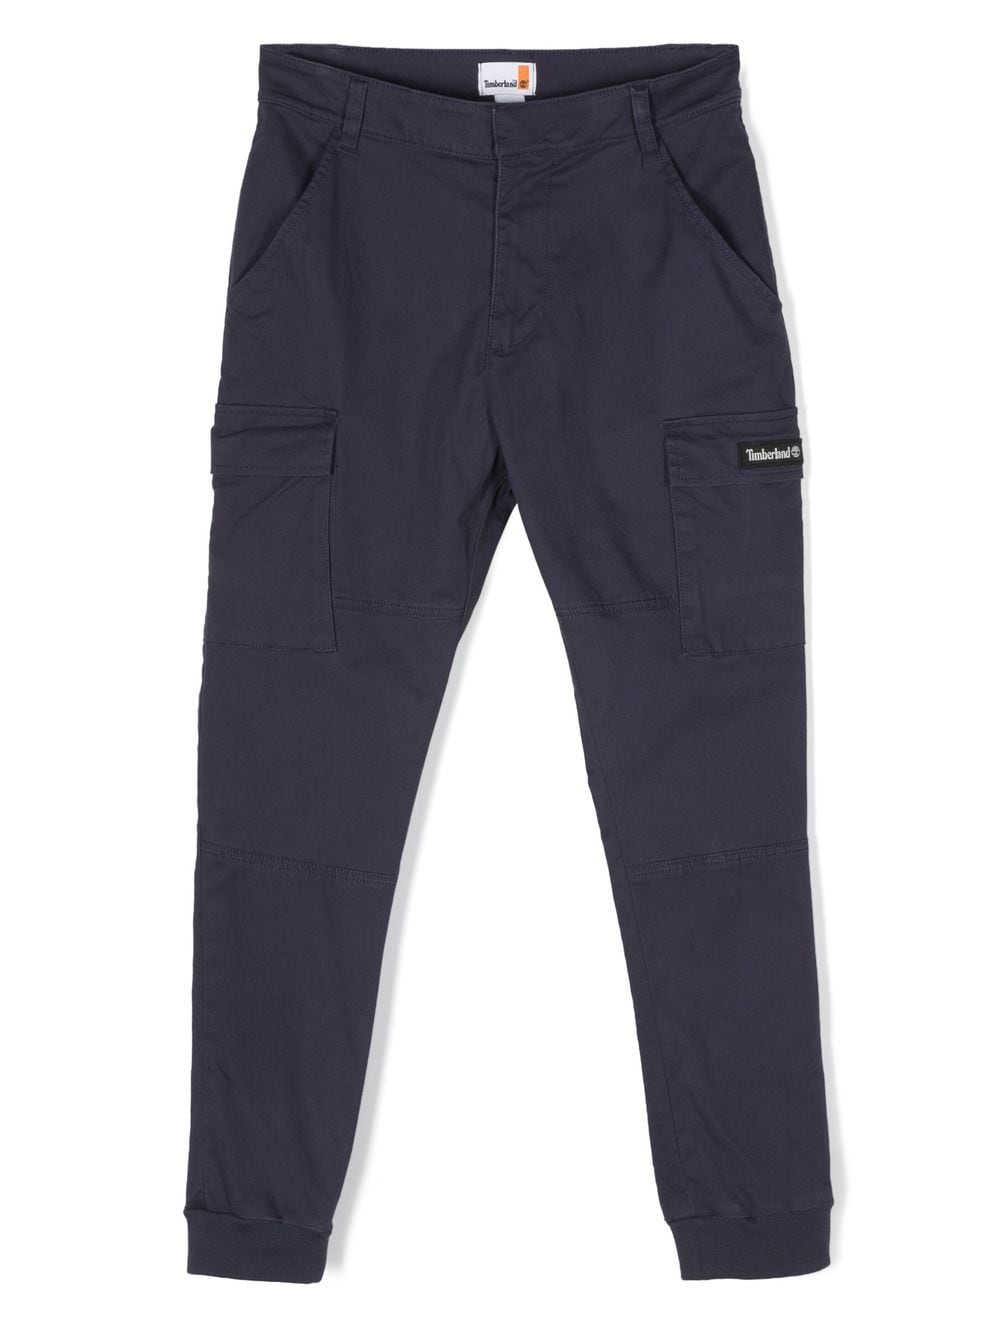 Navy blue cotton boy TIMBERLAND pants | Carofiglio Junior